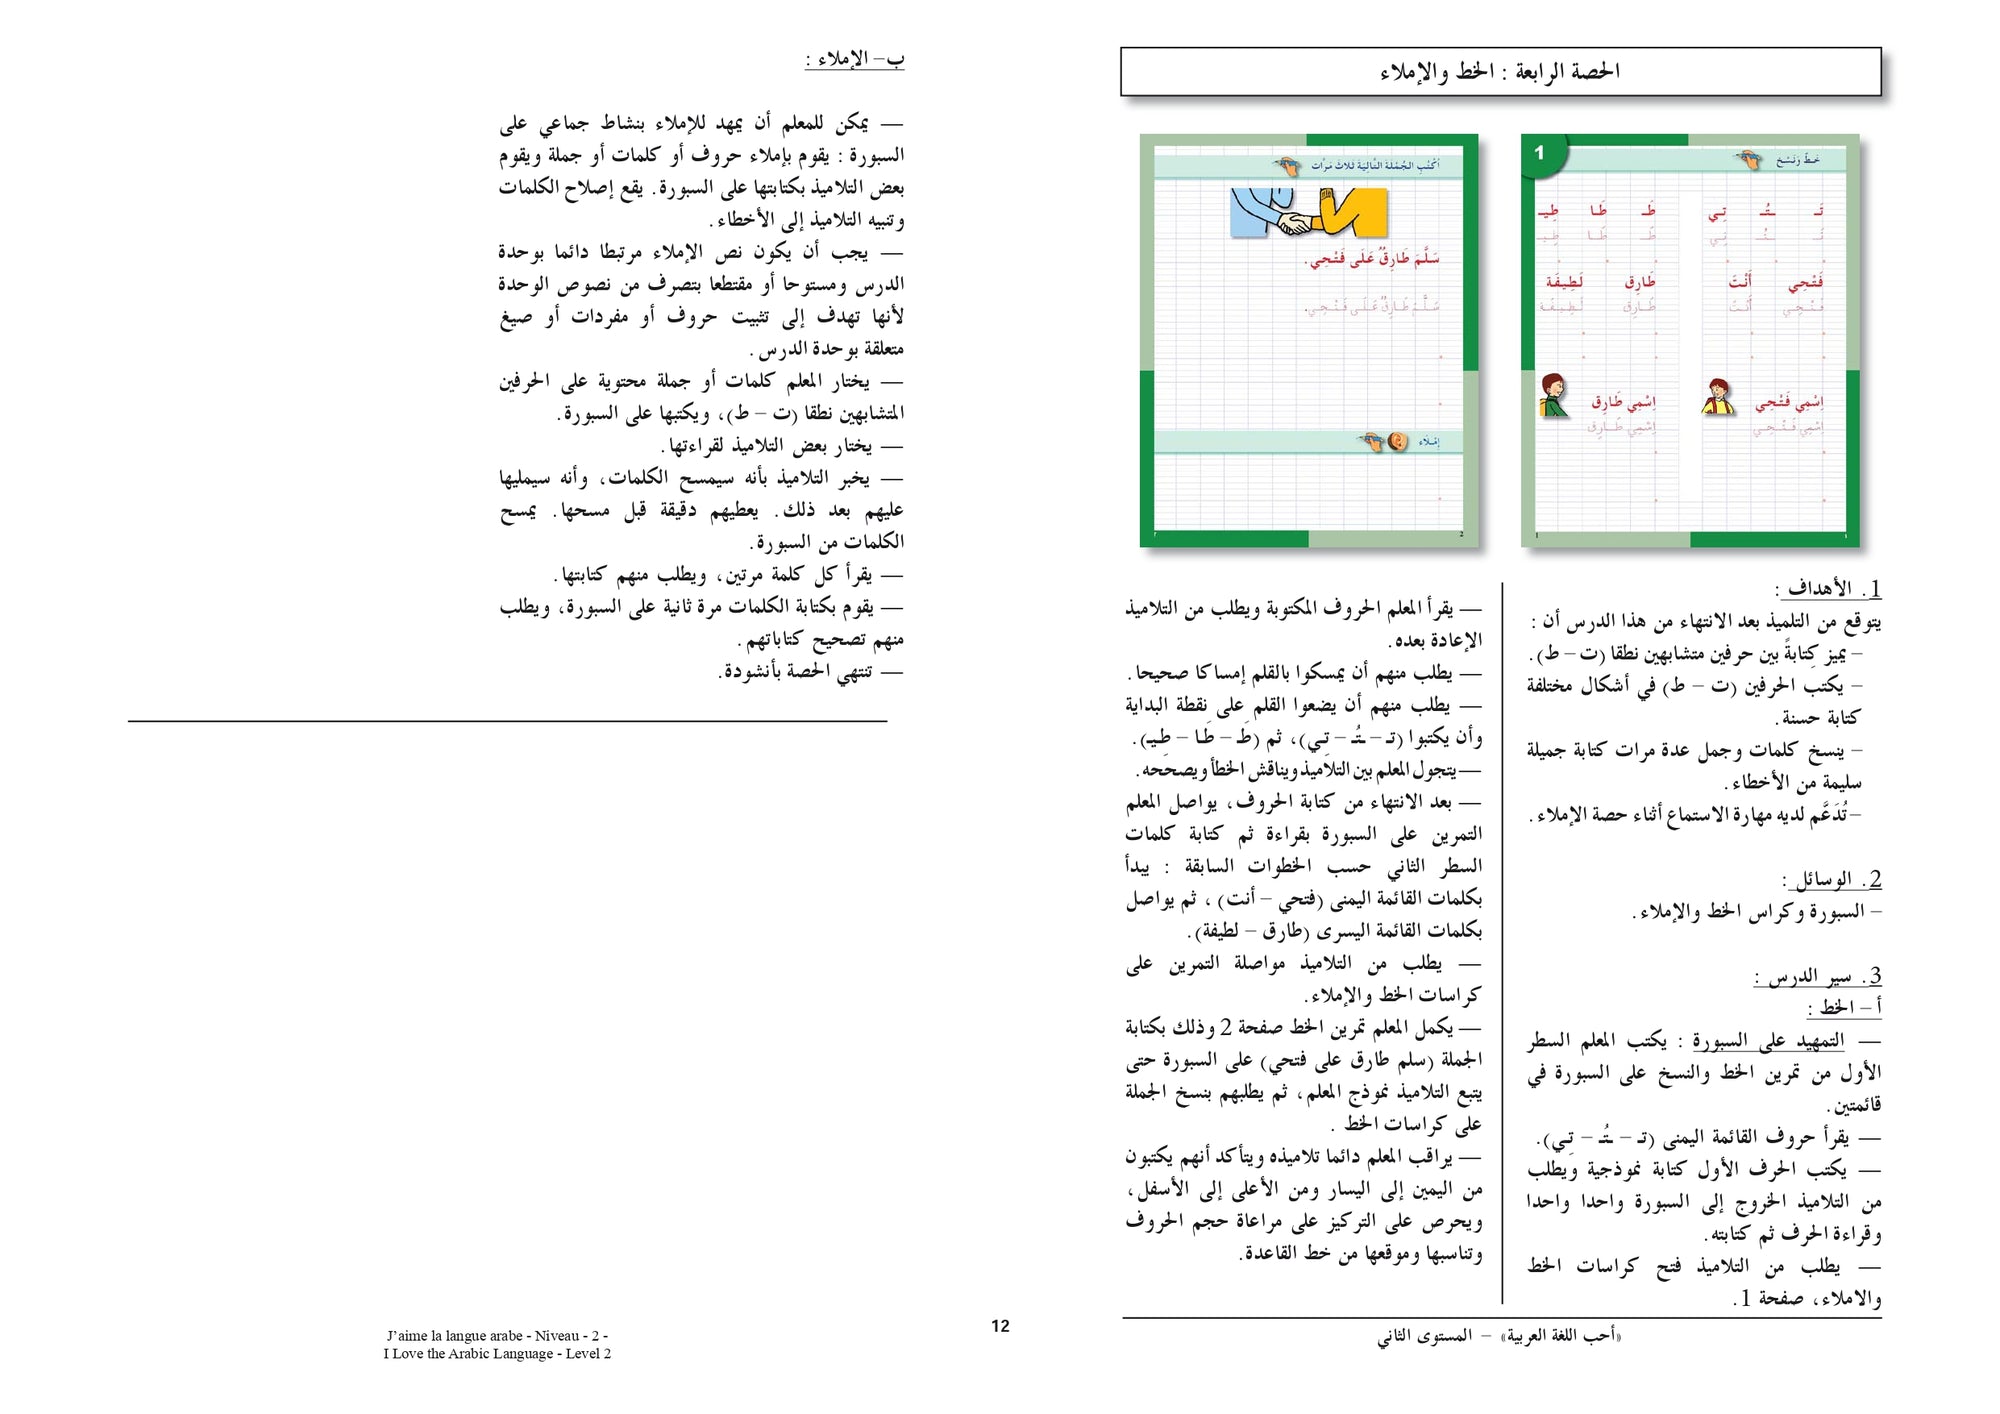 I Love the Arabic Language Teacher Book Level 2